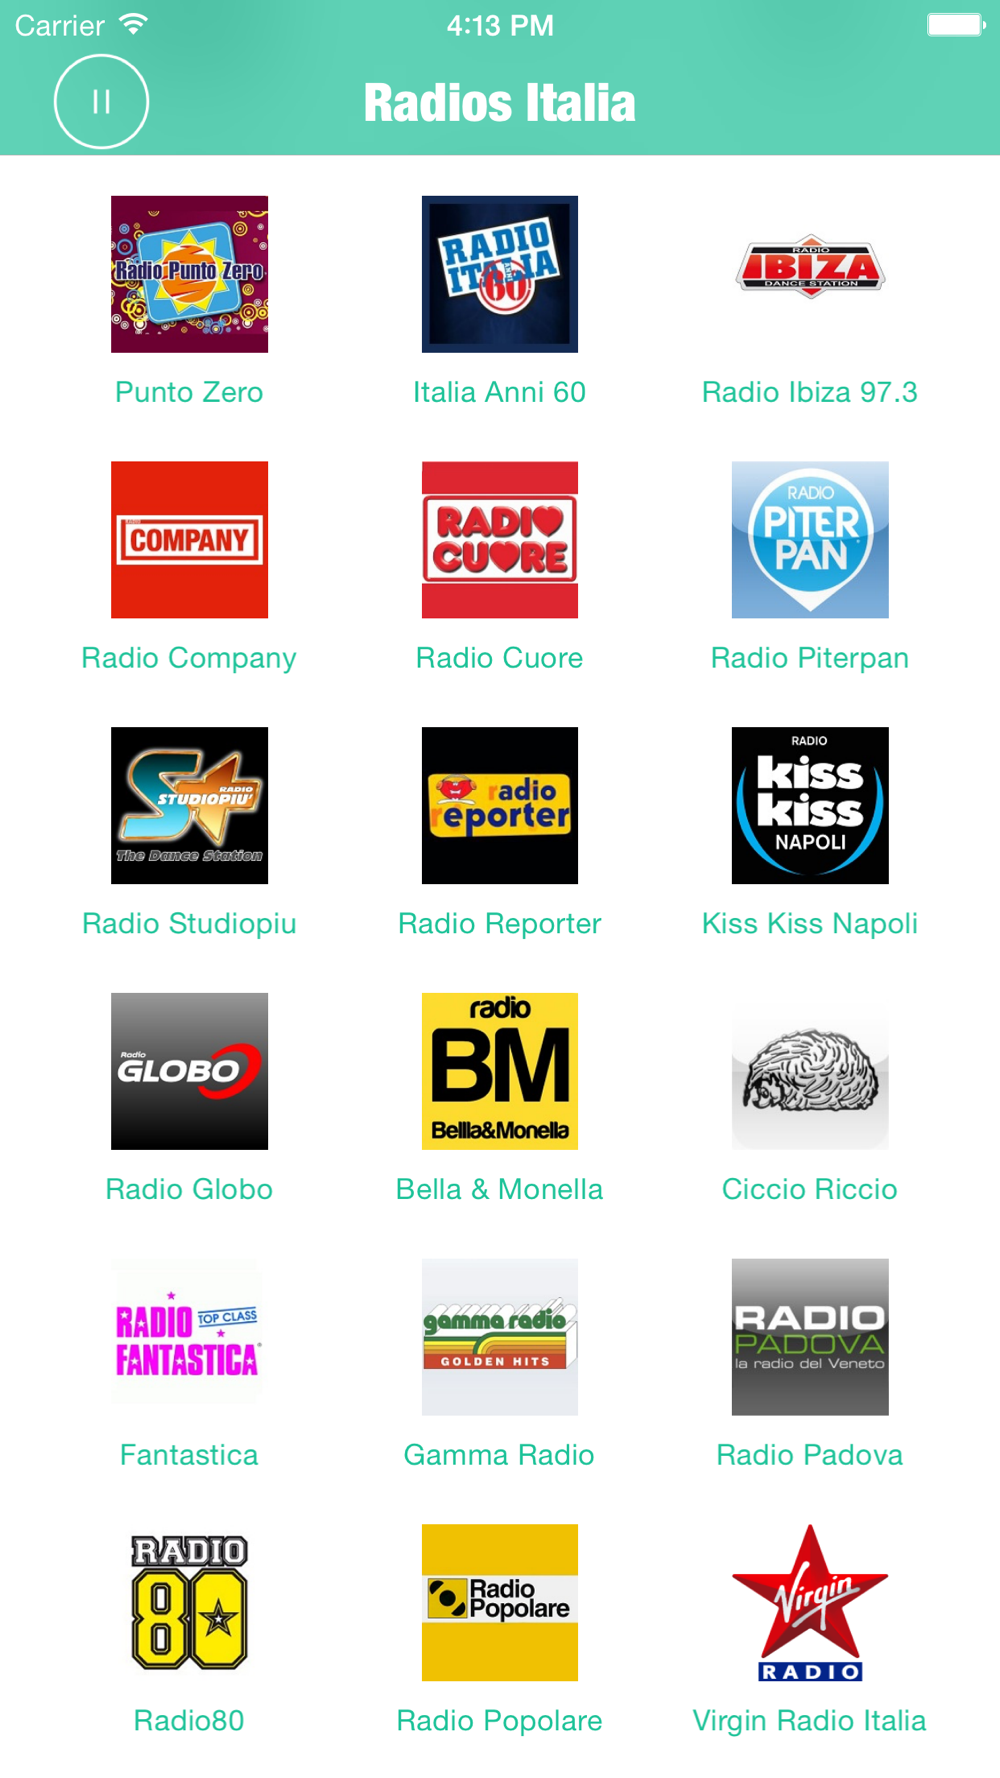 Radios Italia Pro Italy Radio Download App for iPhone - STEPrimo.com